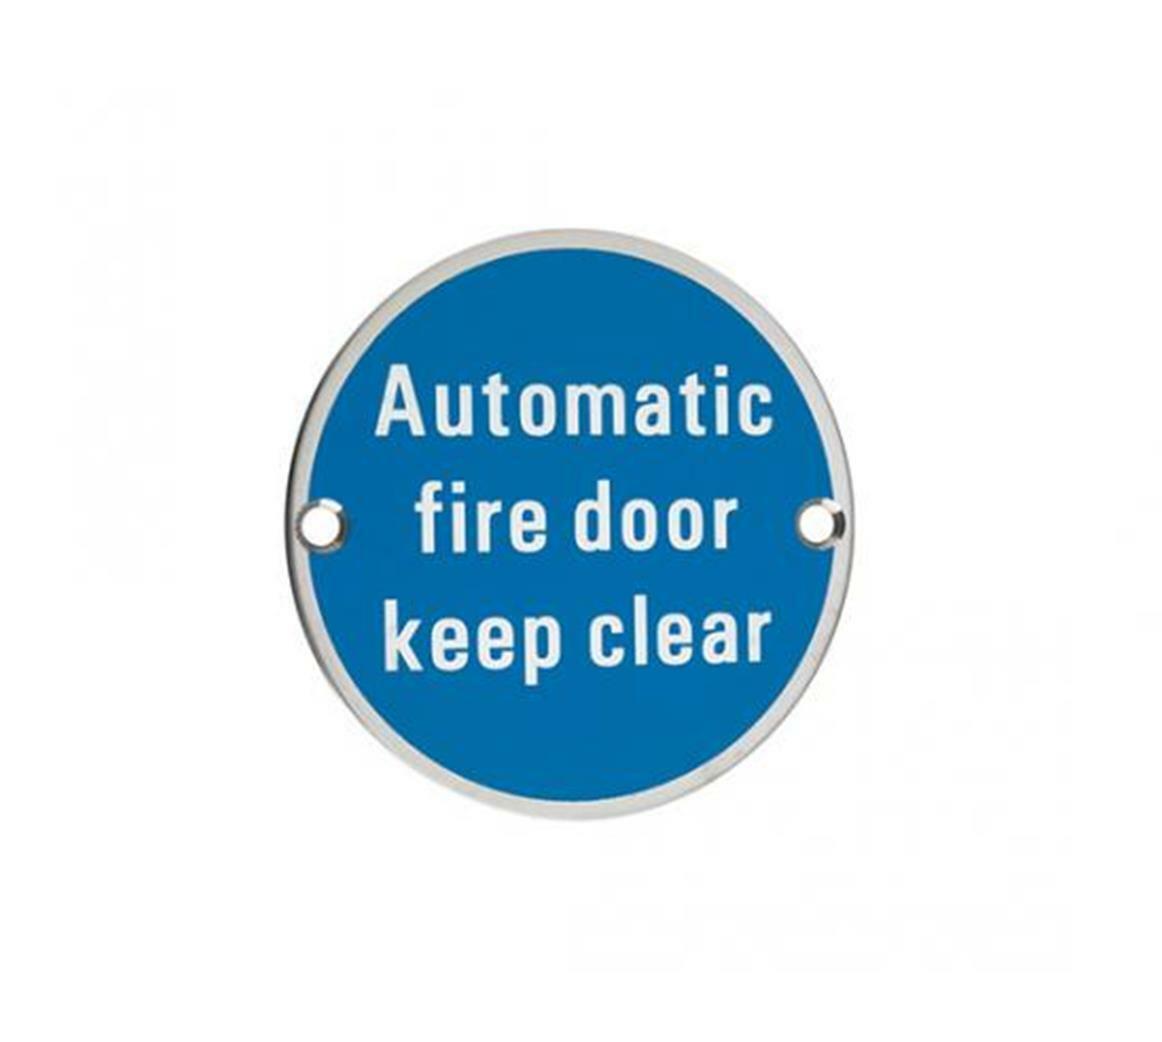 75mm (3") "AUTOMATIC FIRE DOOR KEEP CLEAR" Blue Circular Door Sign Symbol